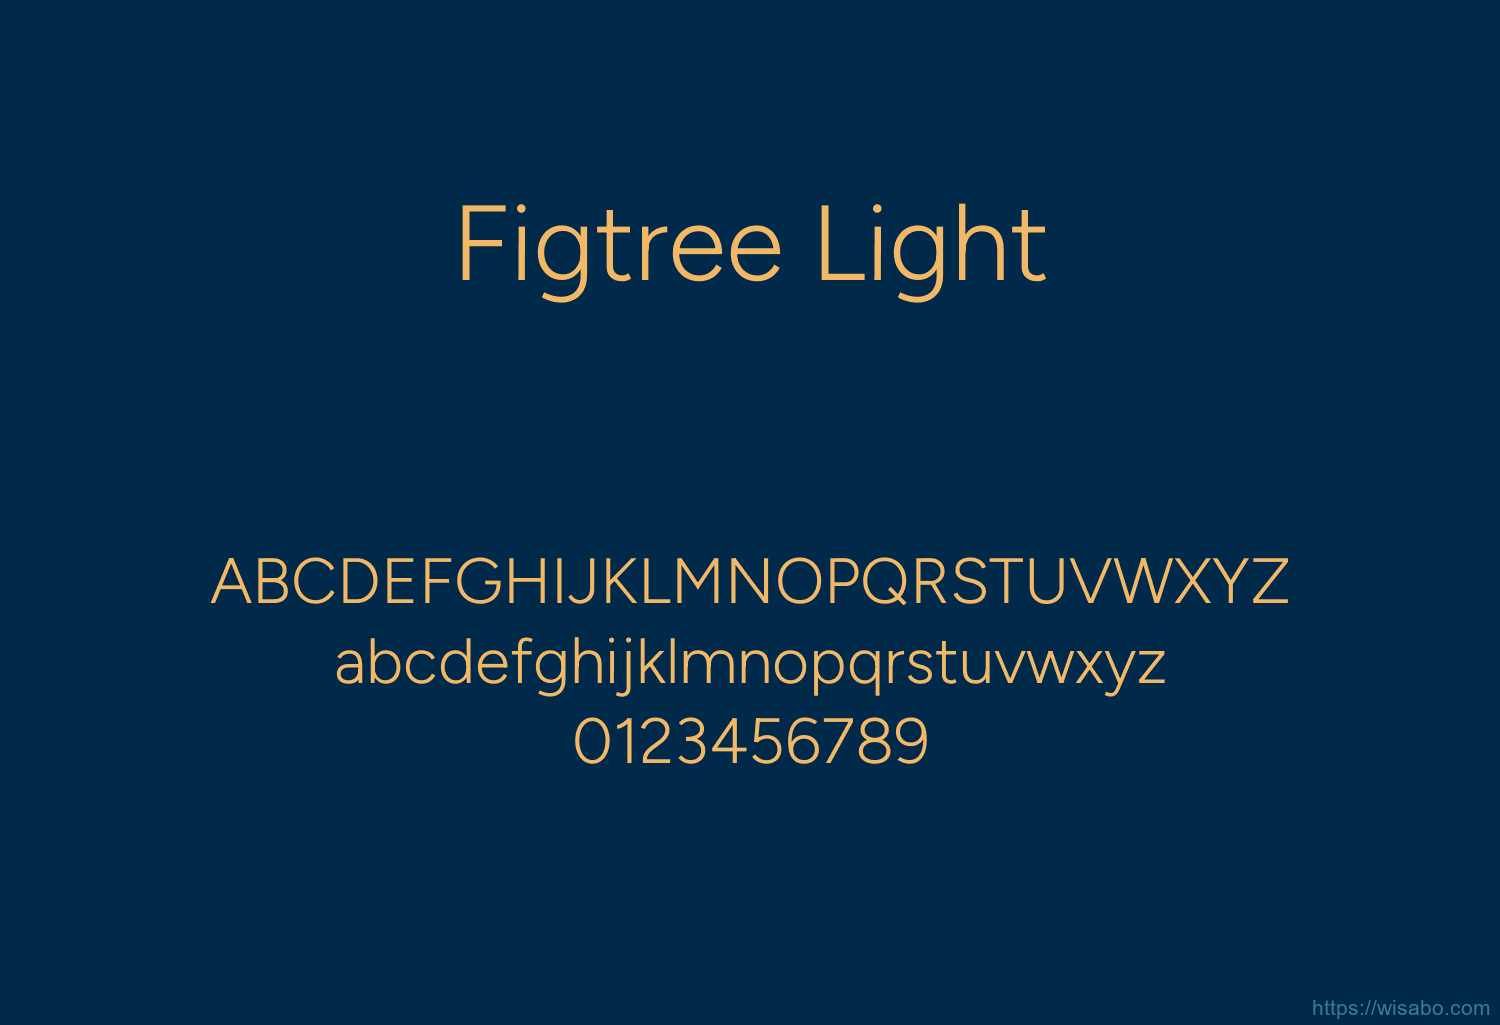 Figtree Light